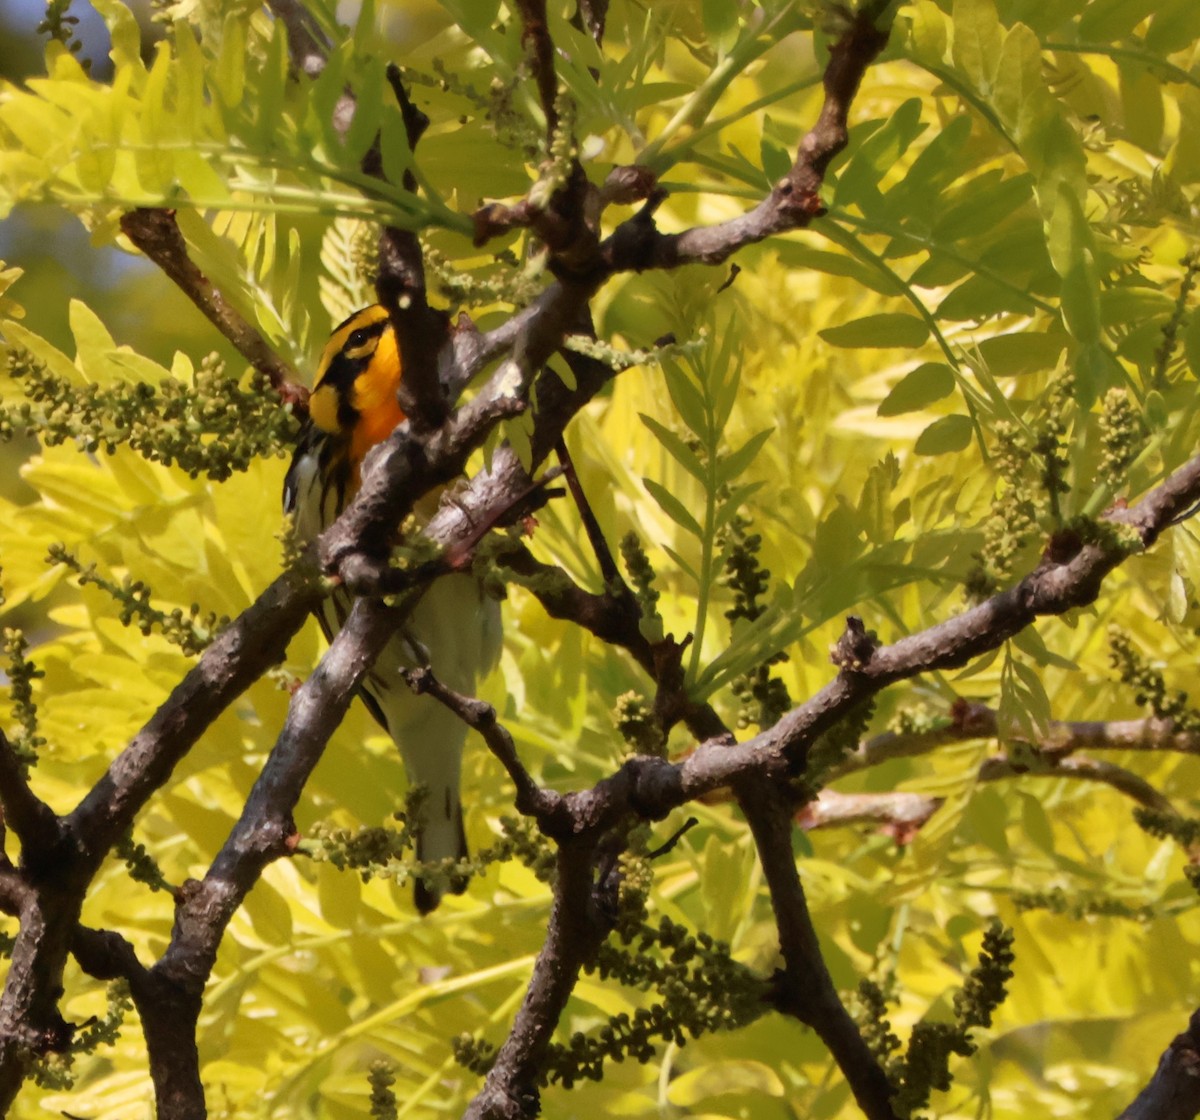 Blackburnian Warbler - Santo A. Locasto